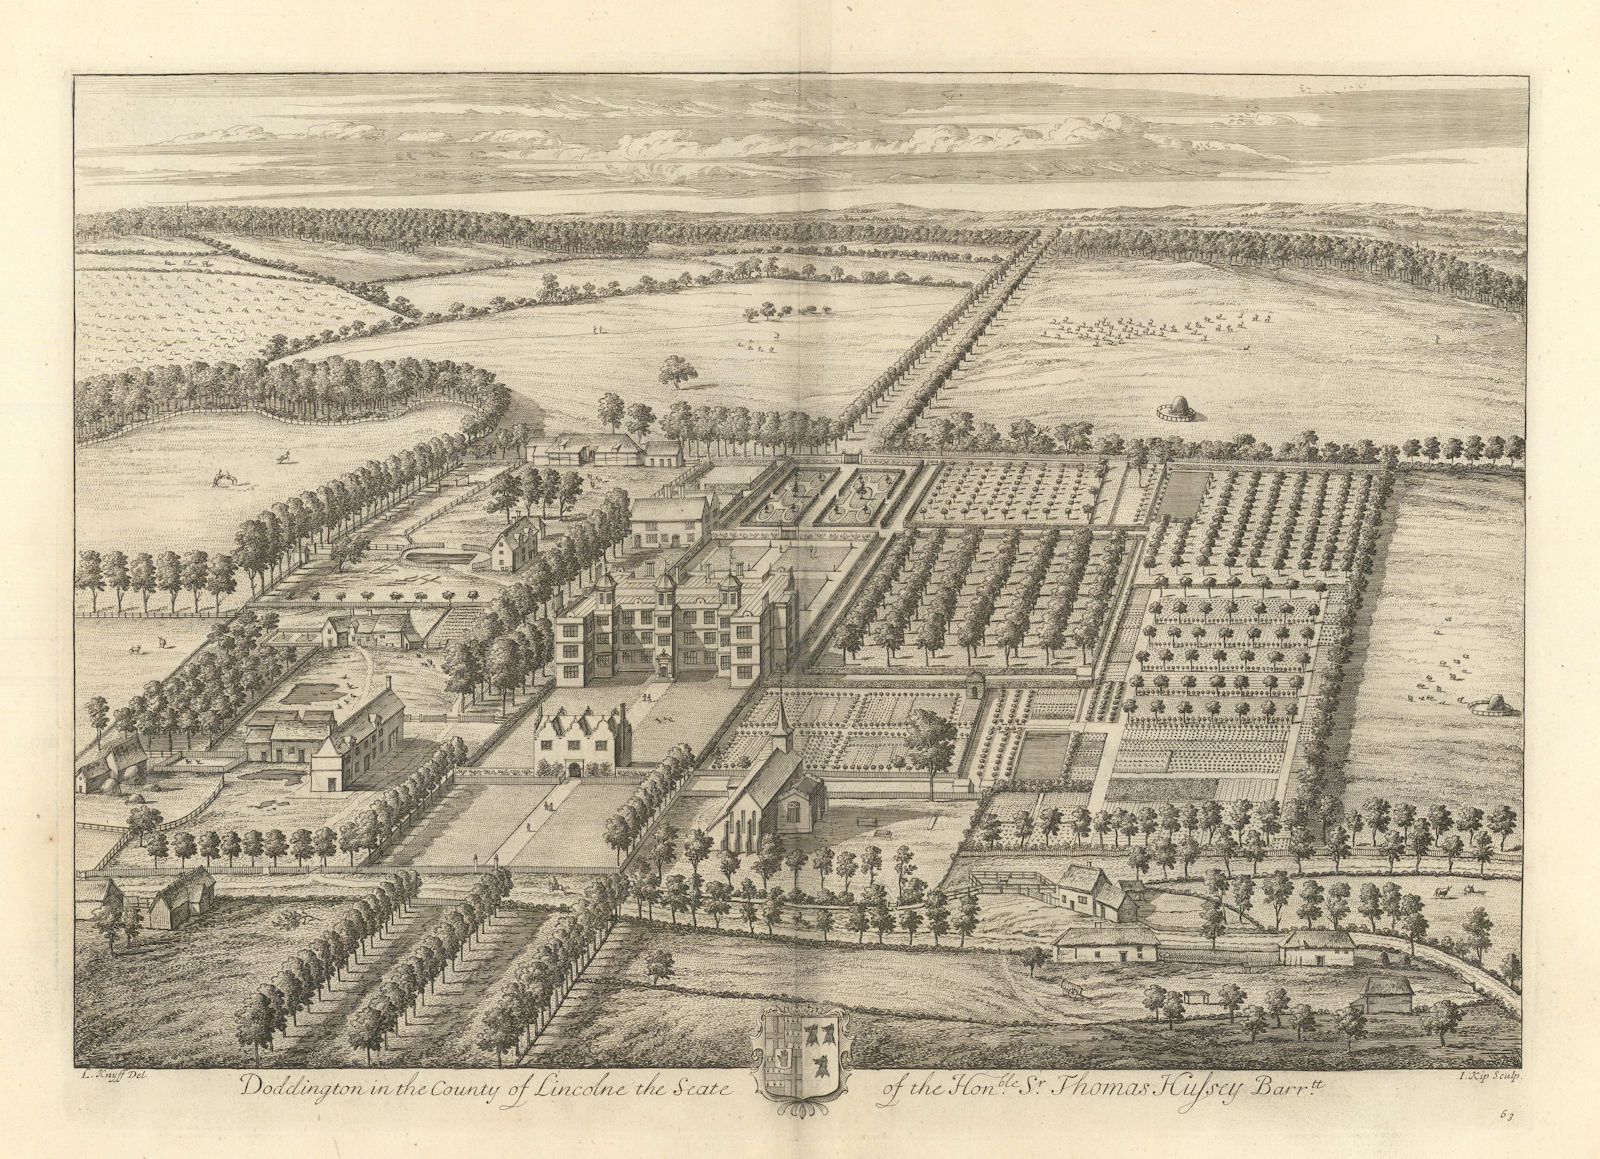 Doddington Hall by Kip & Knyff. "Doddington in the County of Lincolne" 1709